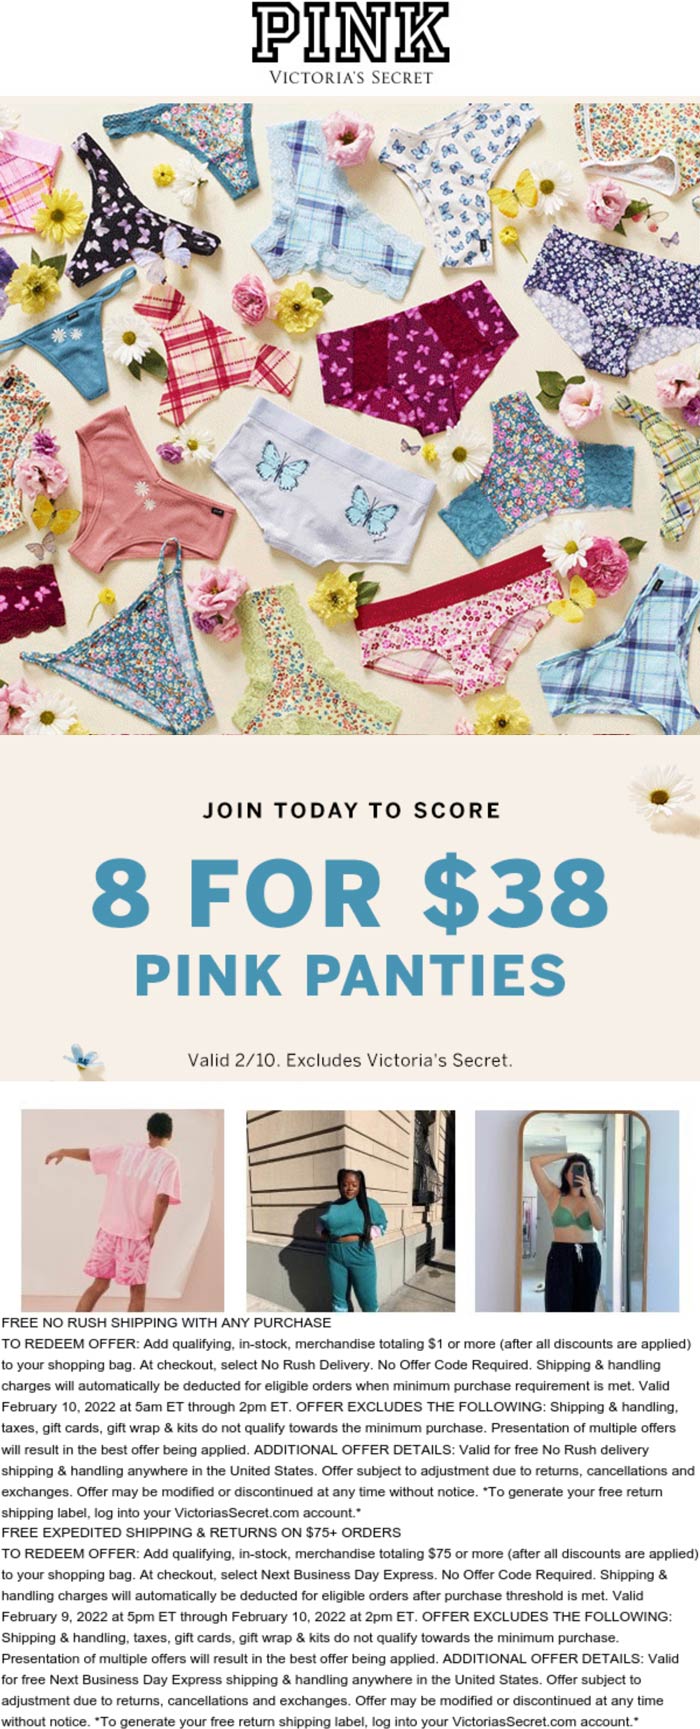 PINK stores Coupon  Members get 8 panties for $38 today at PINK #pink 